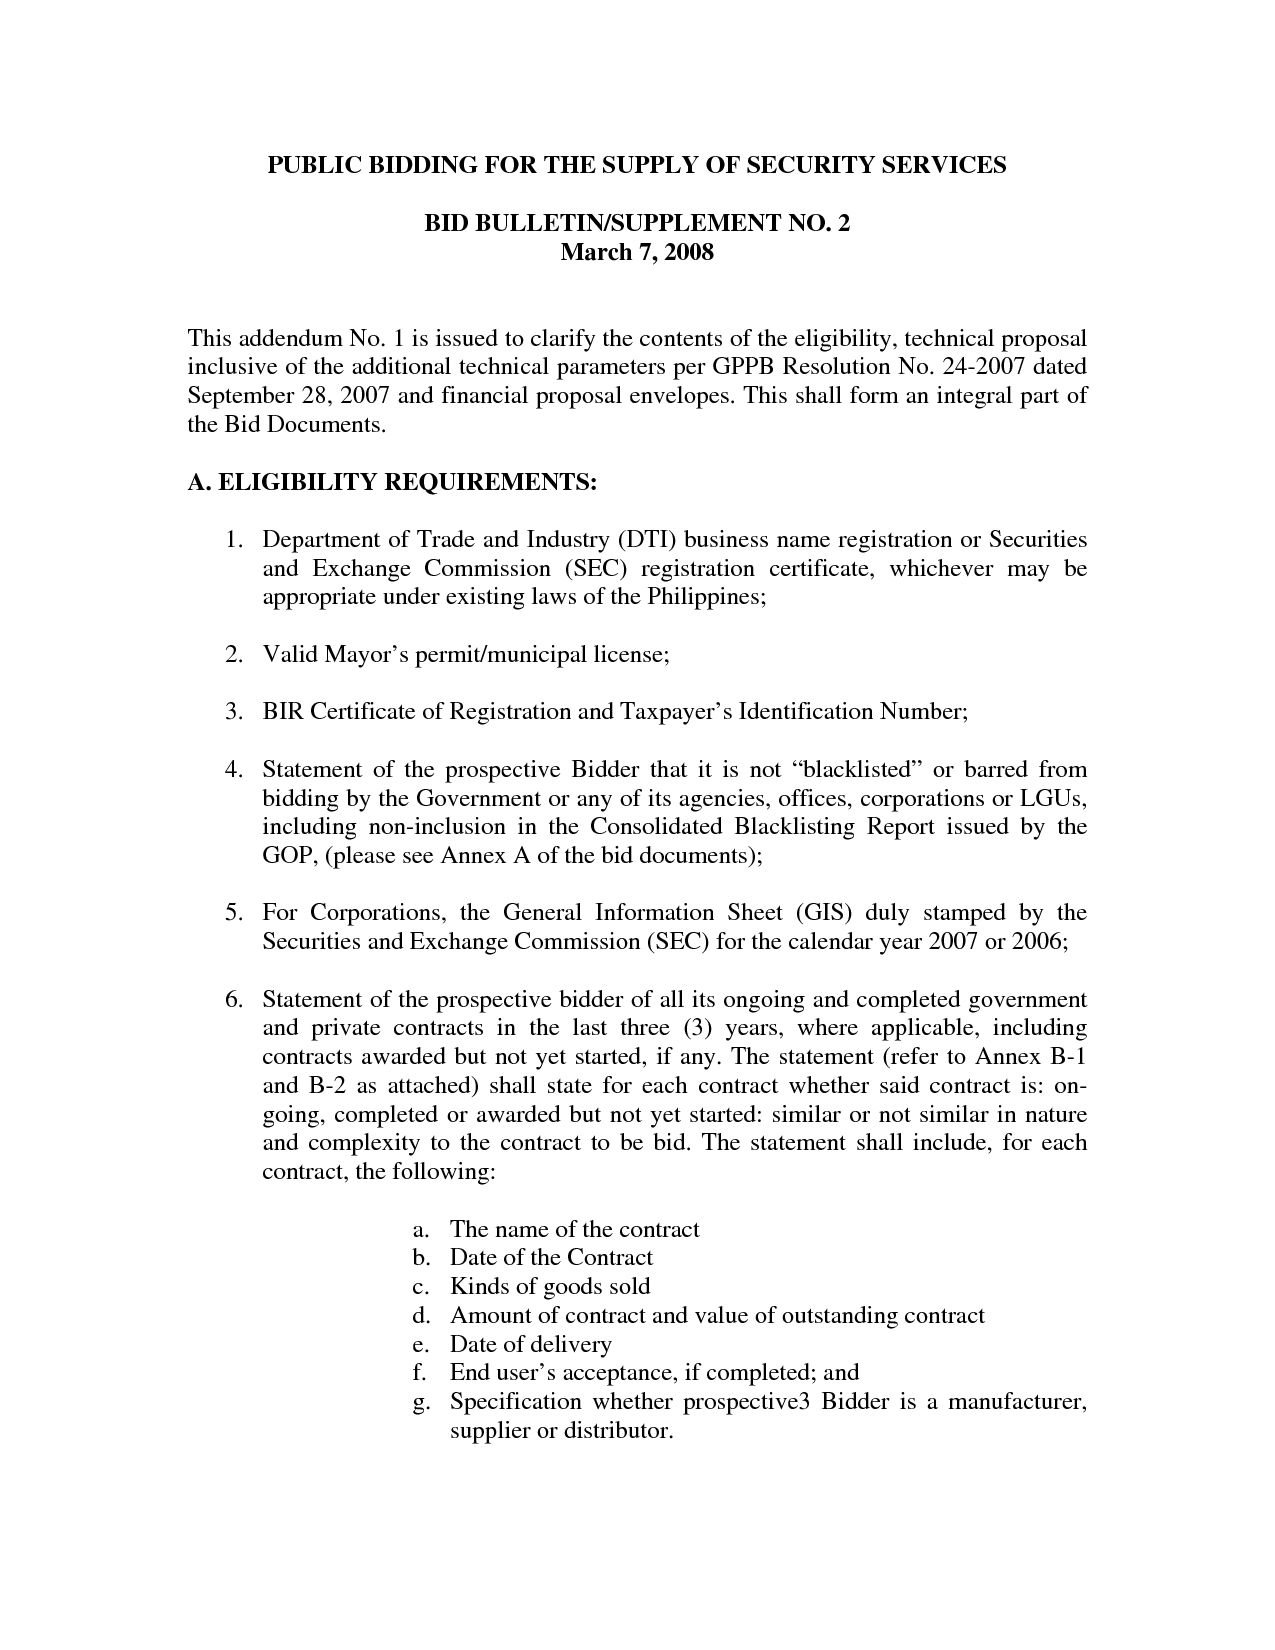 Security Proposal Letter Sample